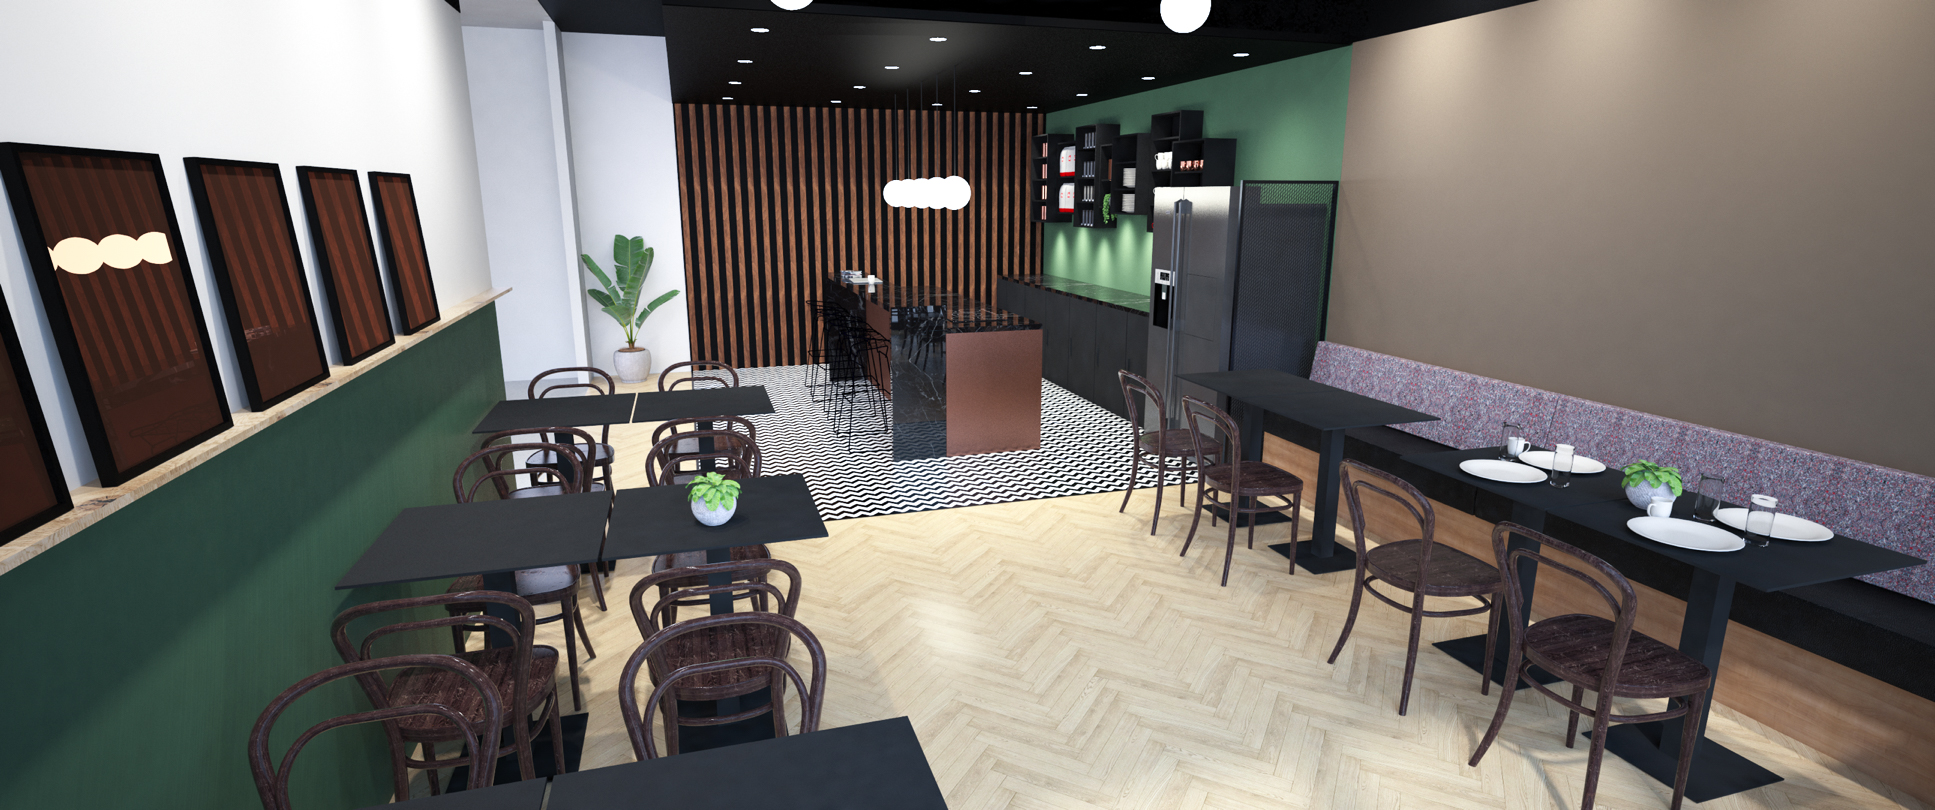 concept-koffiebar-restaurant.jpg